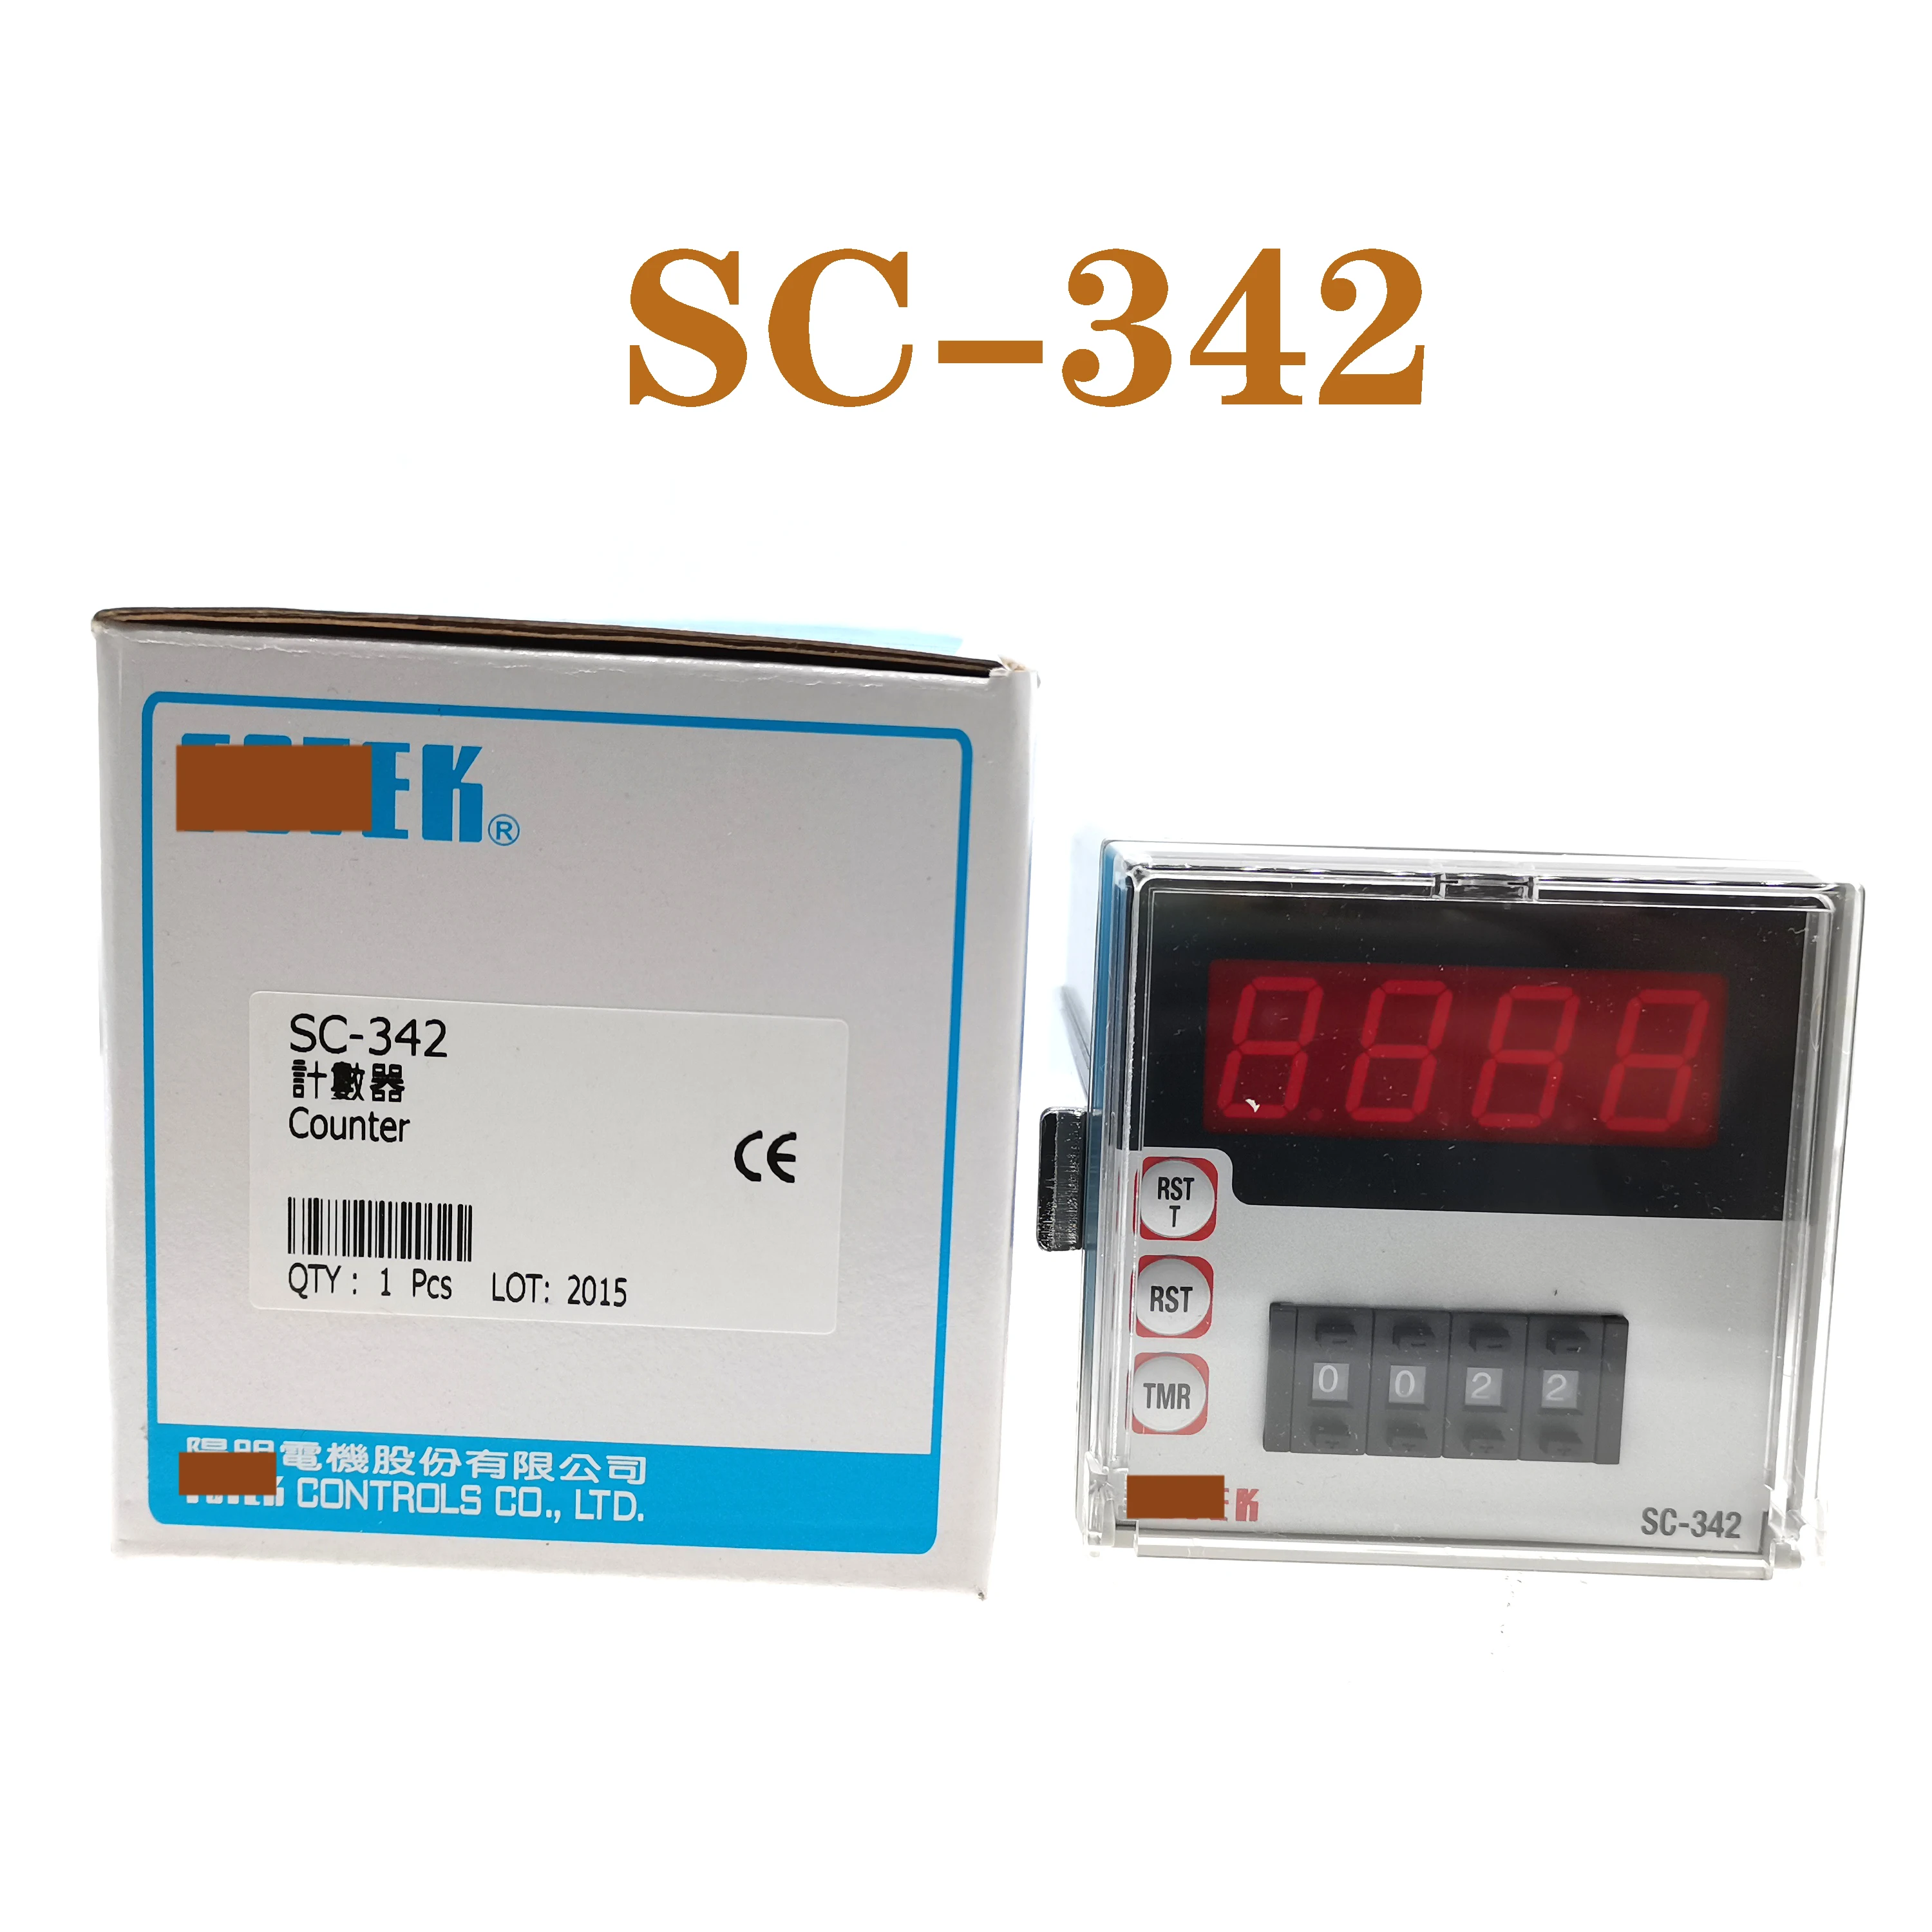 

SC-342 Brand New Original Multi-Function Counter In Stock